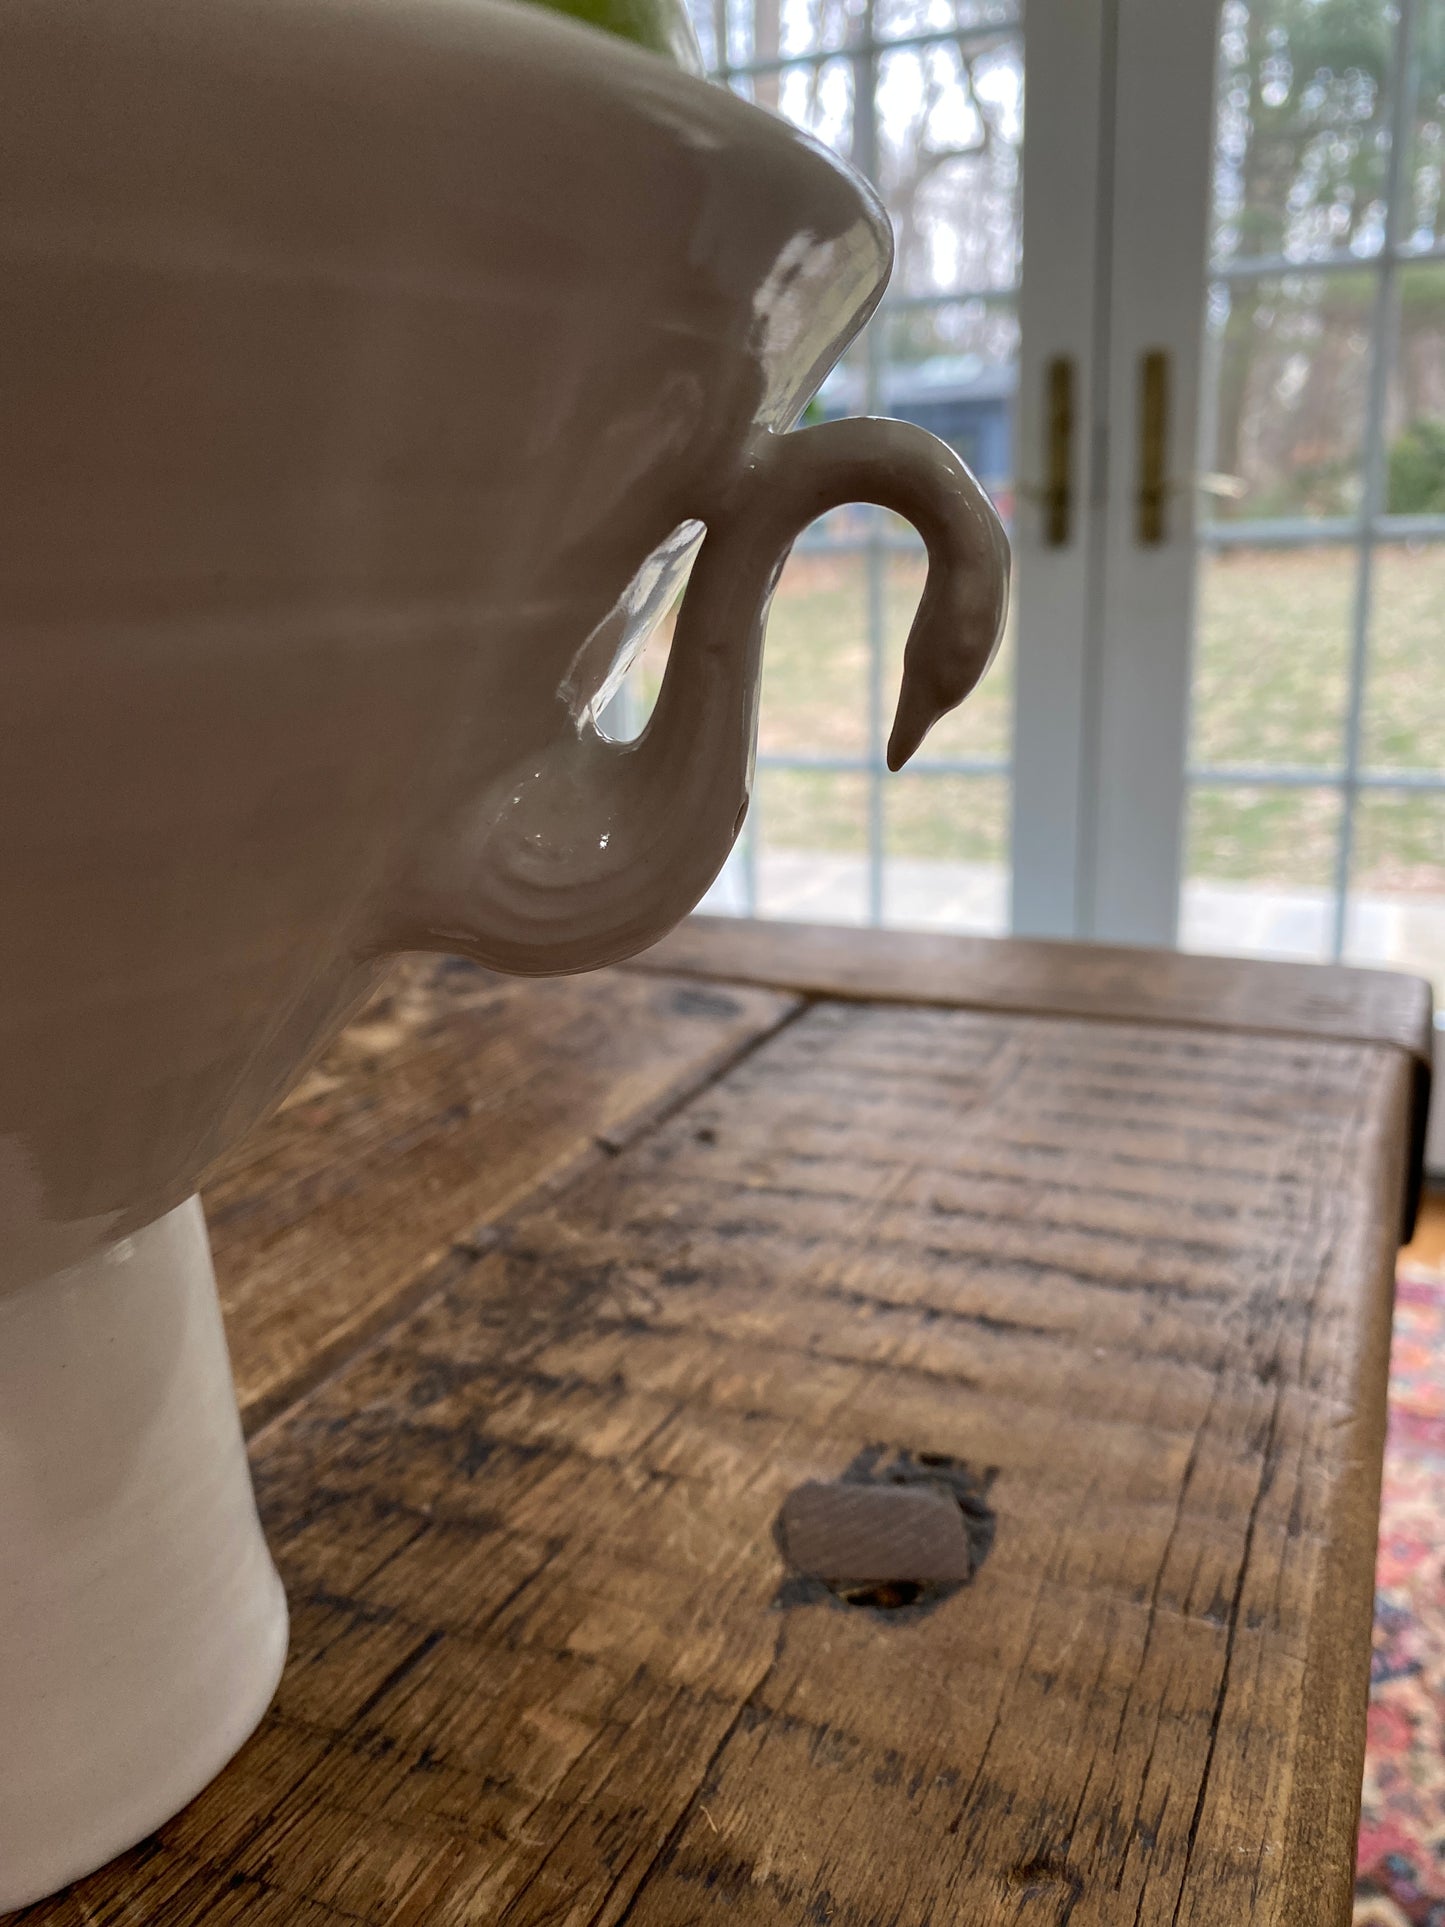 pedestal bowl with swan head handles